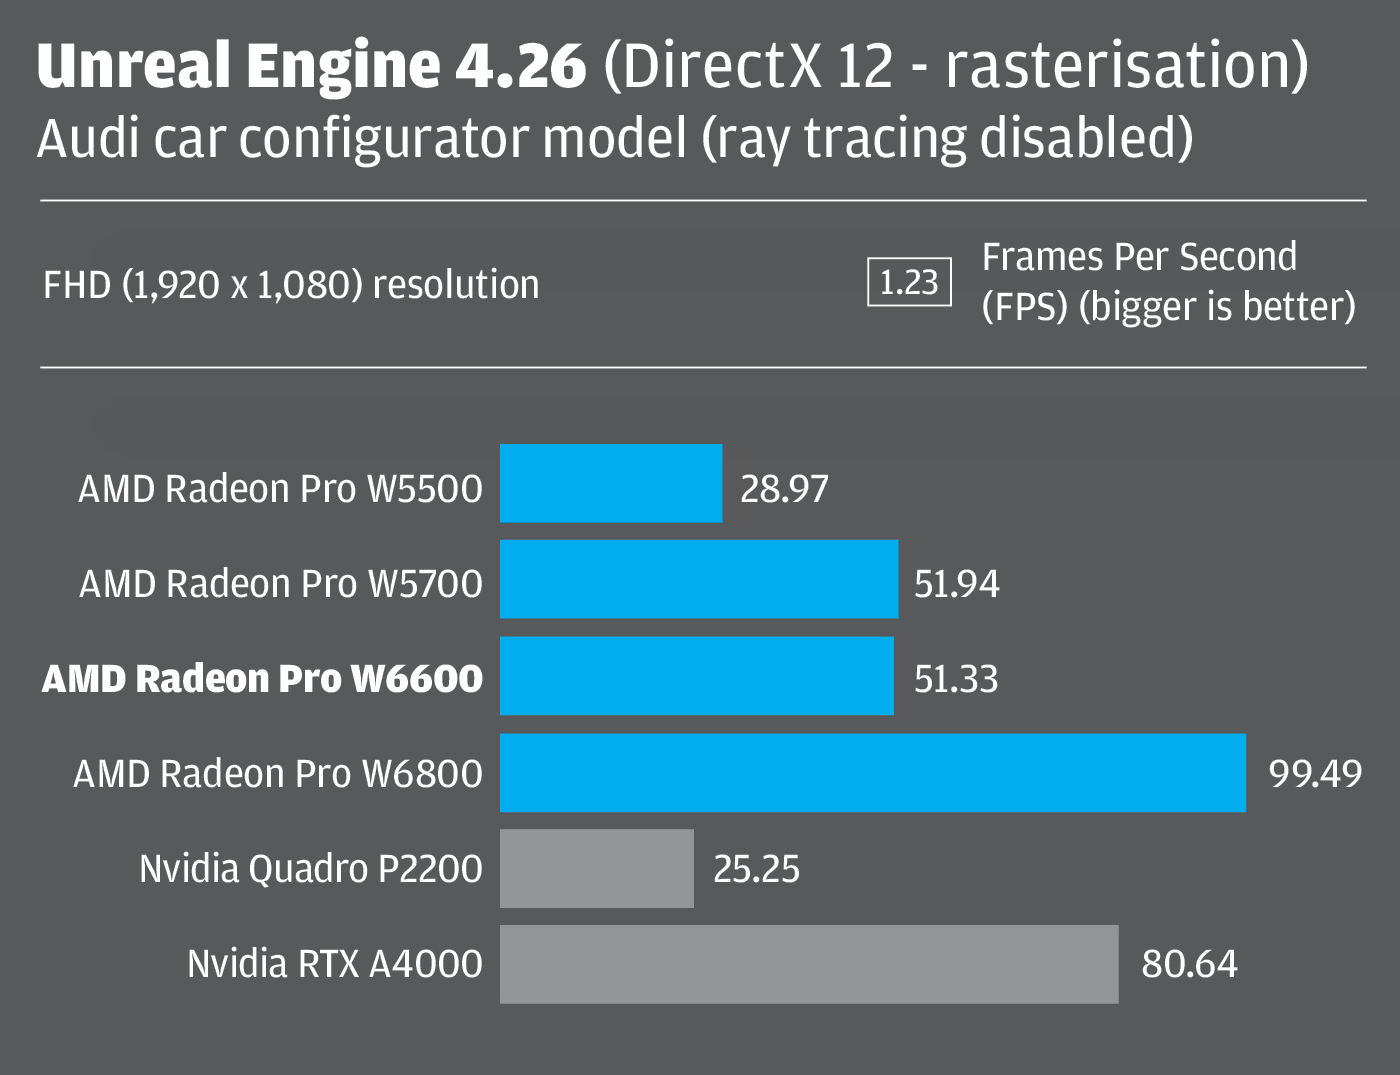 AMD Radeon Pro W6600 GPU review - AEC Magazine